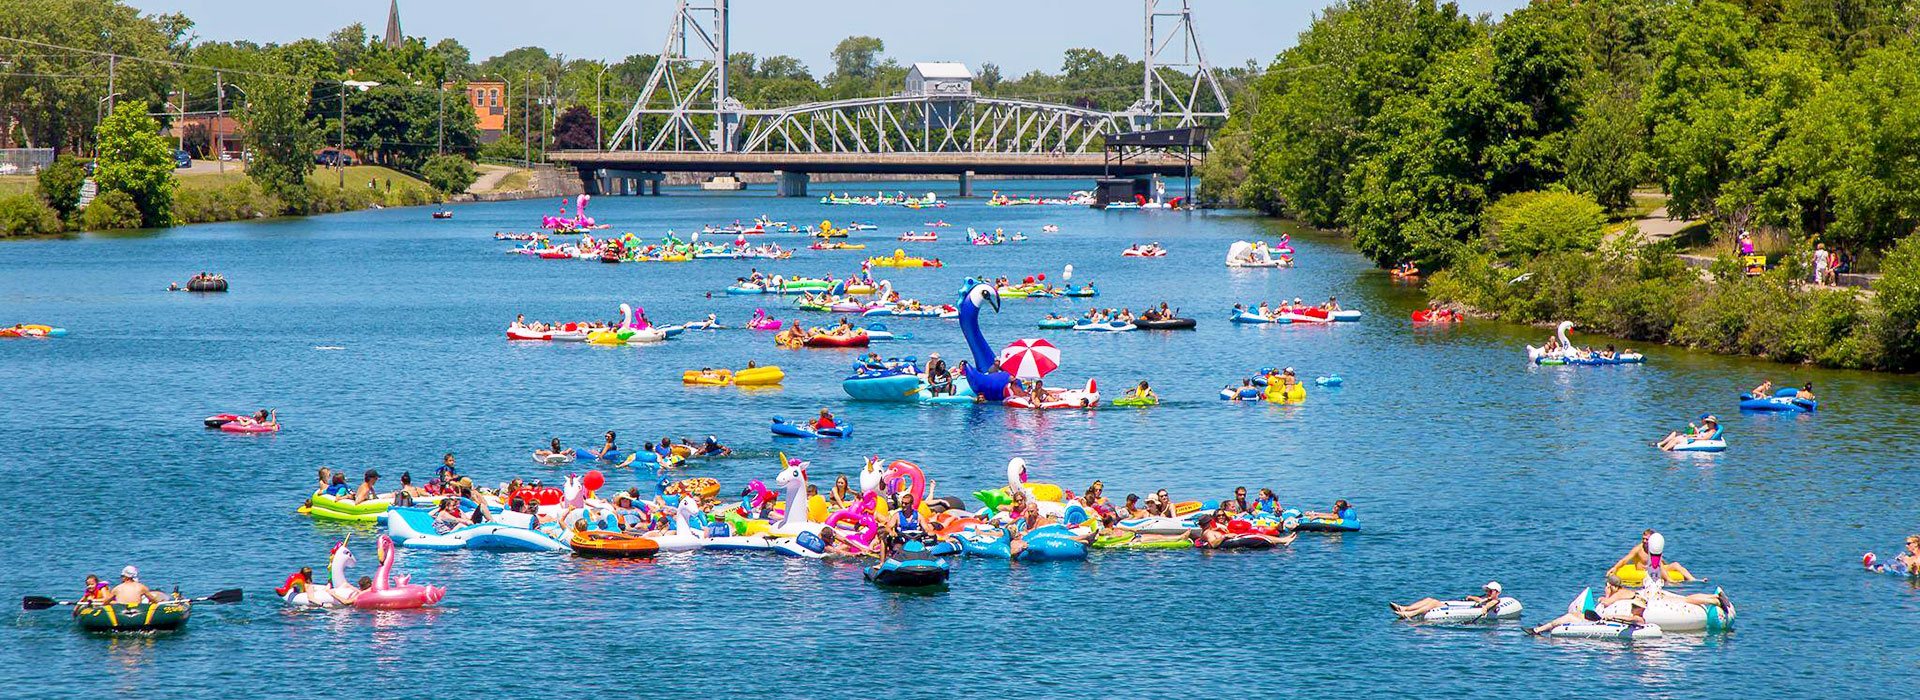 people floating on the waterway